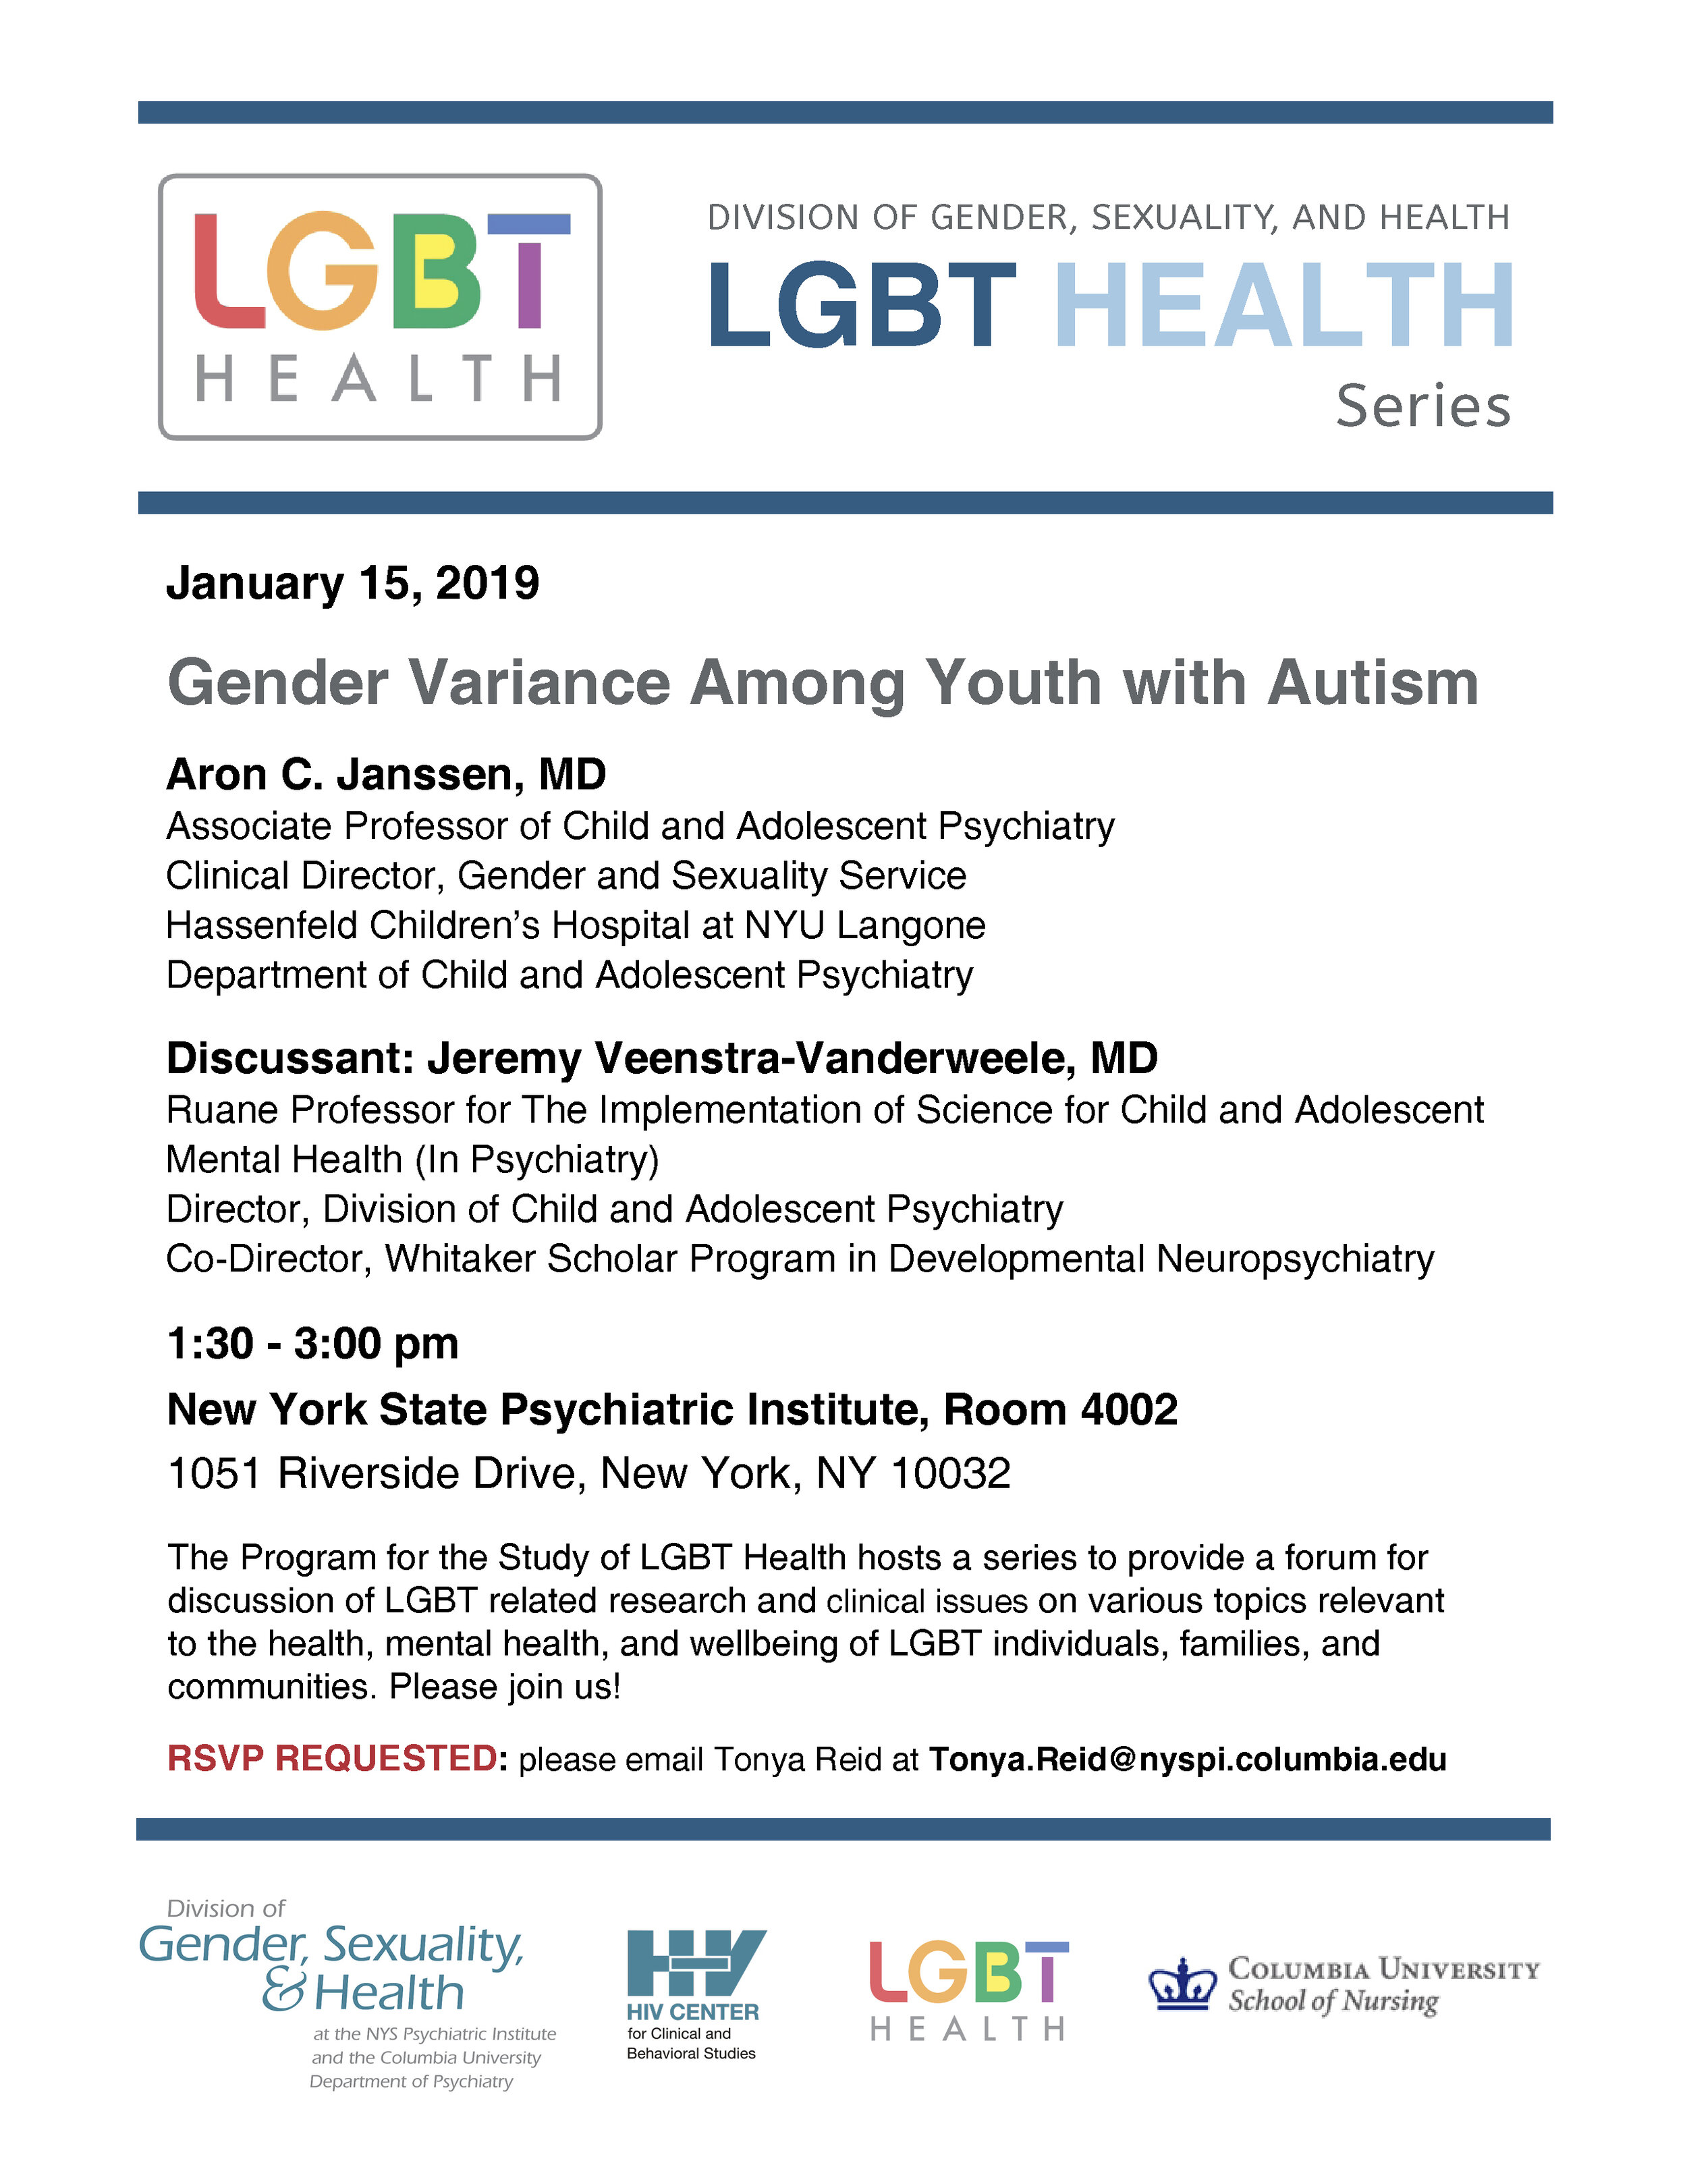 LGBT Health Series Jan 15 2019.jpg